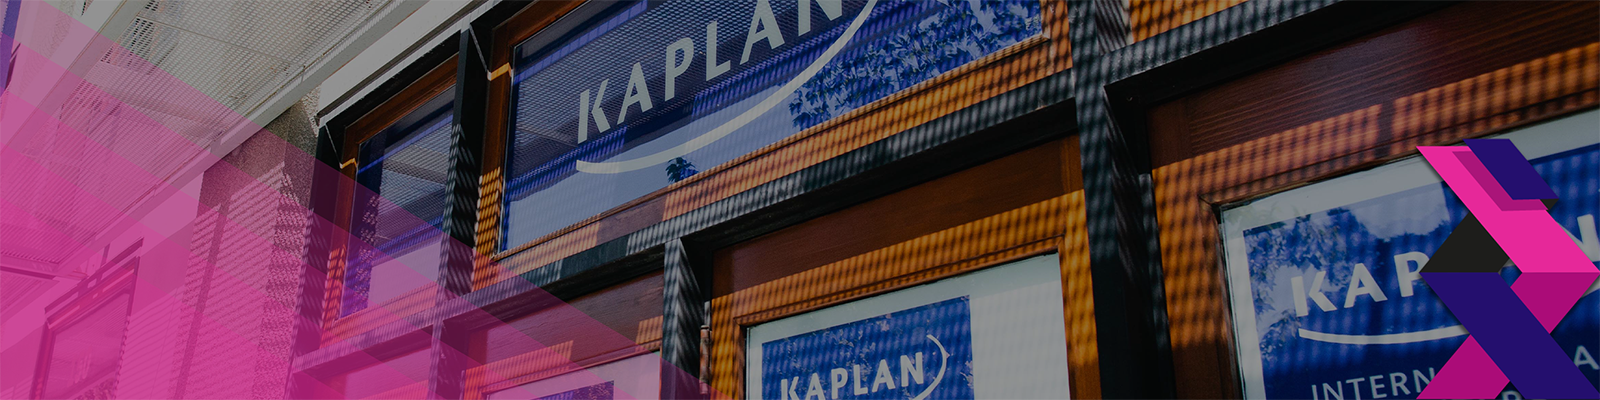 Kaplan International Languages - Los Angeles  görseli